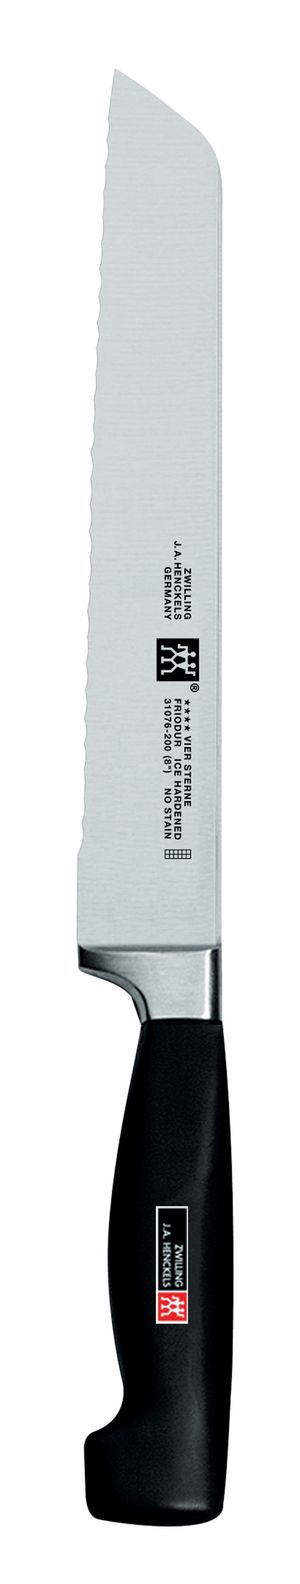 FOUR STAR Bread Knife - 20cm